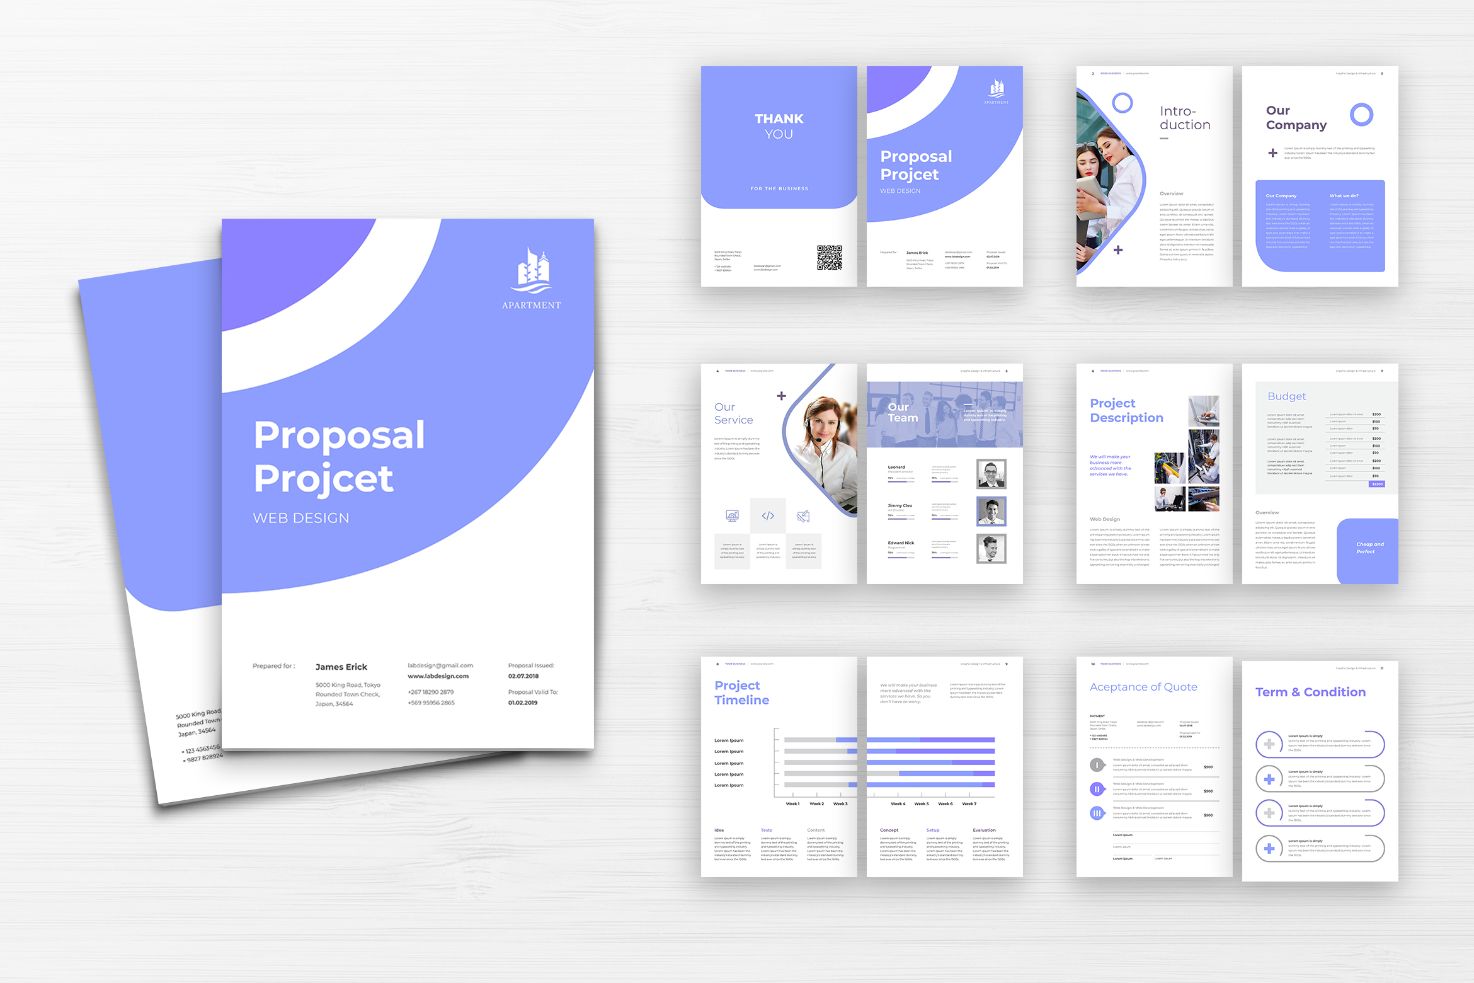 Proposal Web Design Project - Corporate Identity Template